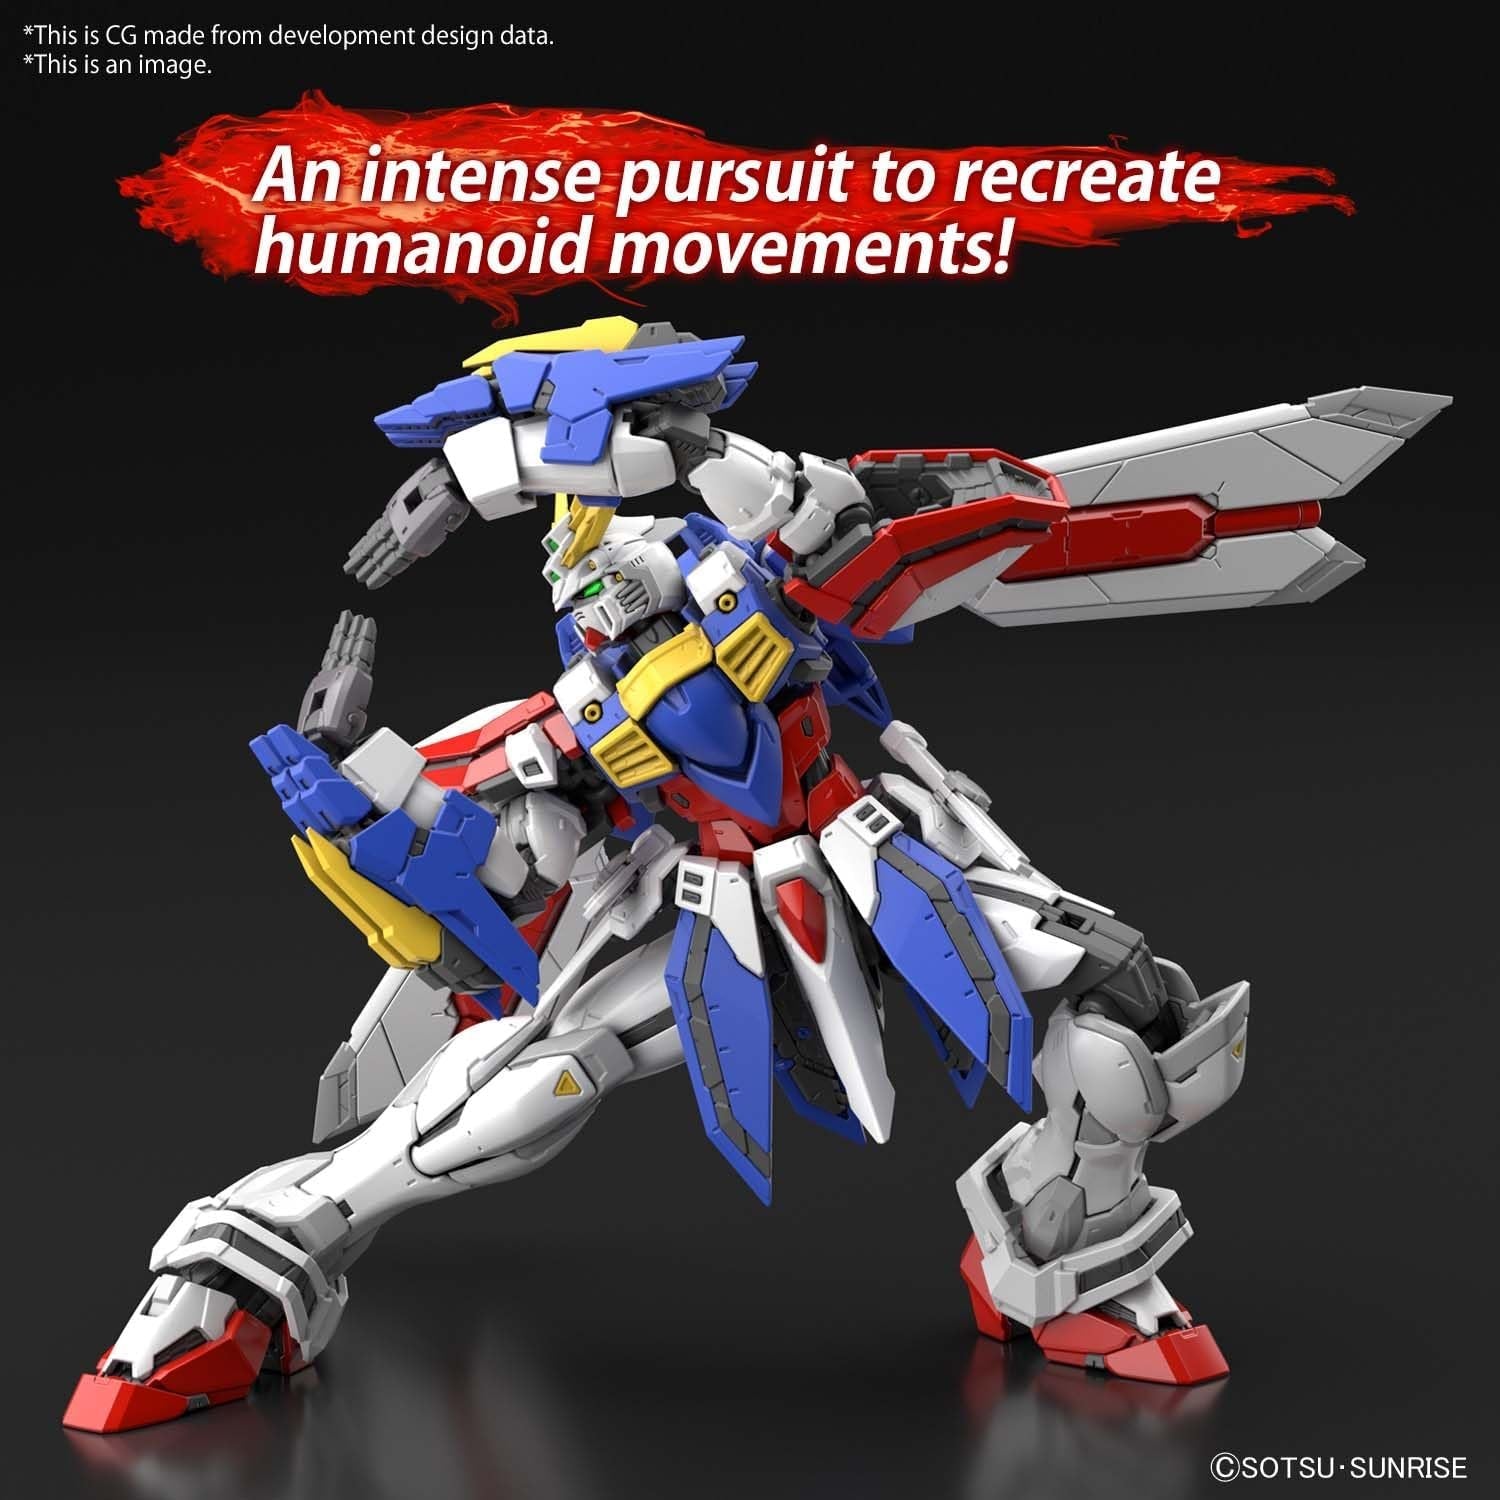 Bandai Hobby - Mobile Fighter G Gundam - #37 God Gundam, Bandai Spirits RG 1/144 Model Kit